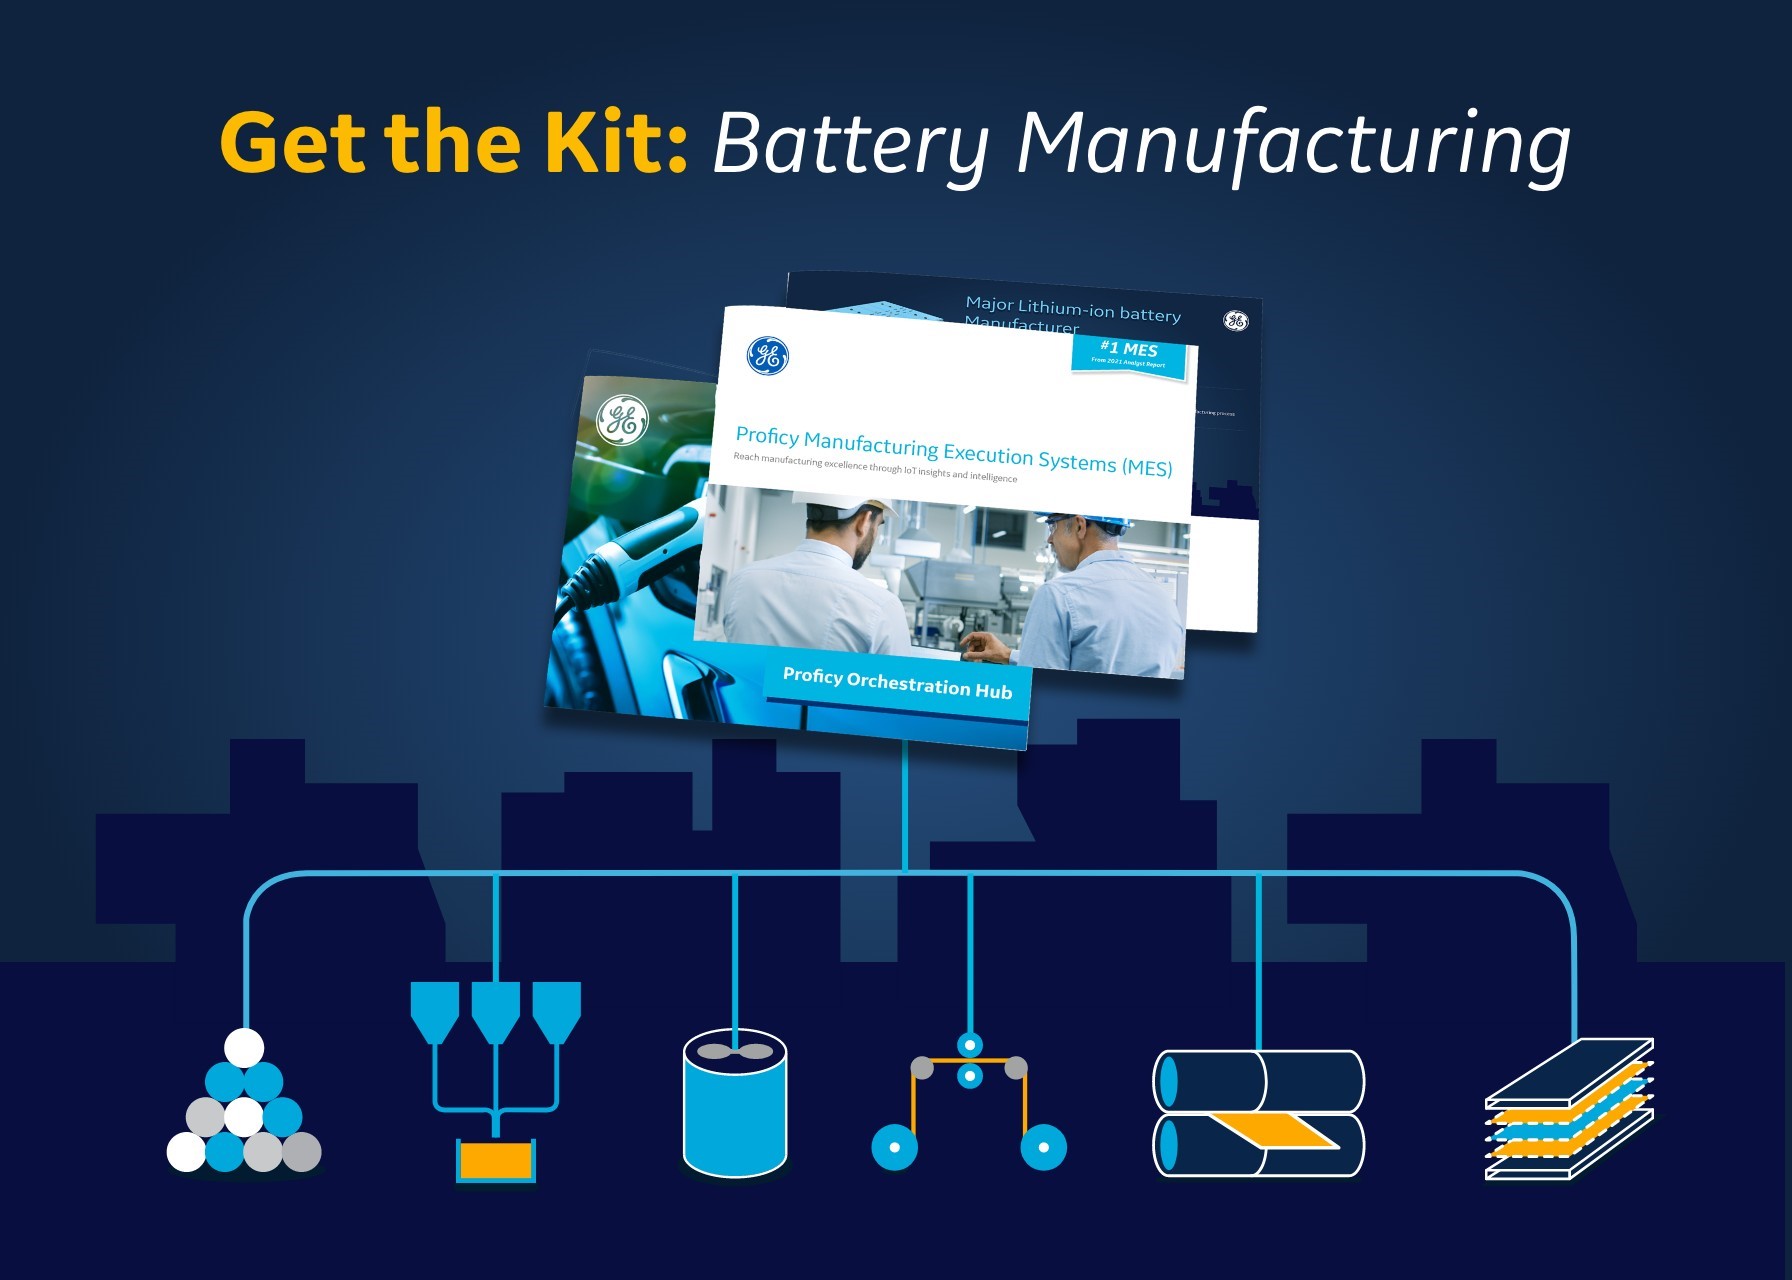 Battery manufacturing kit